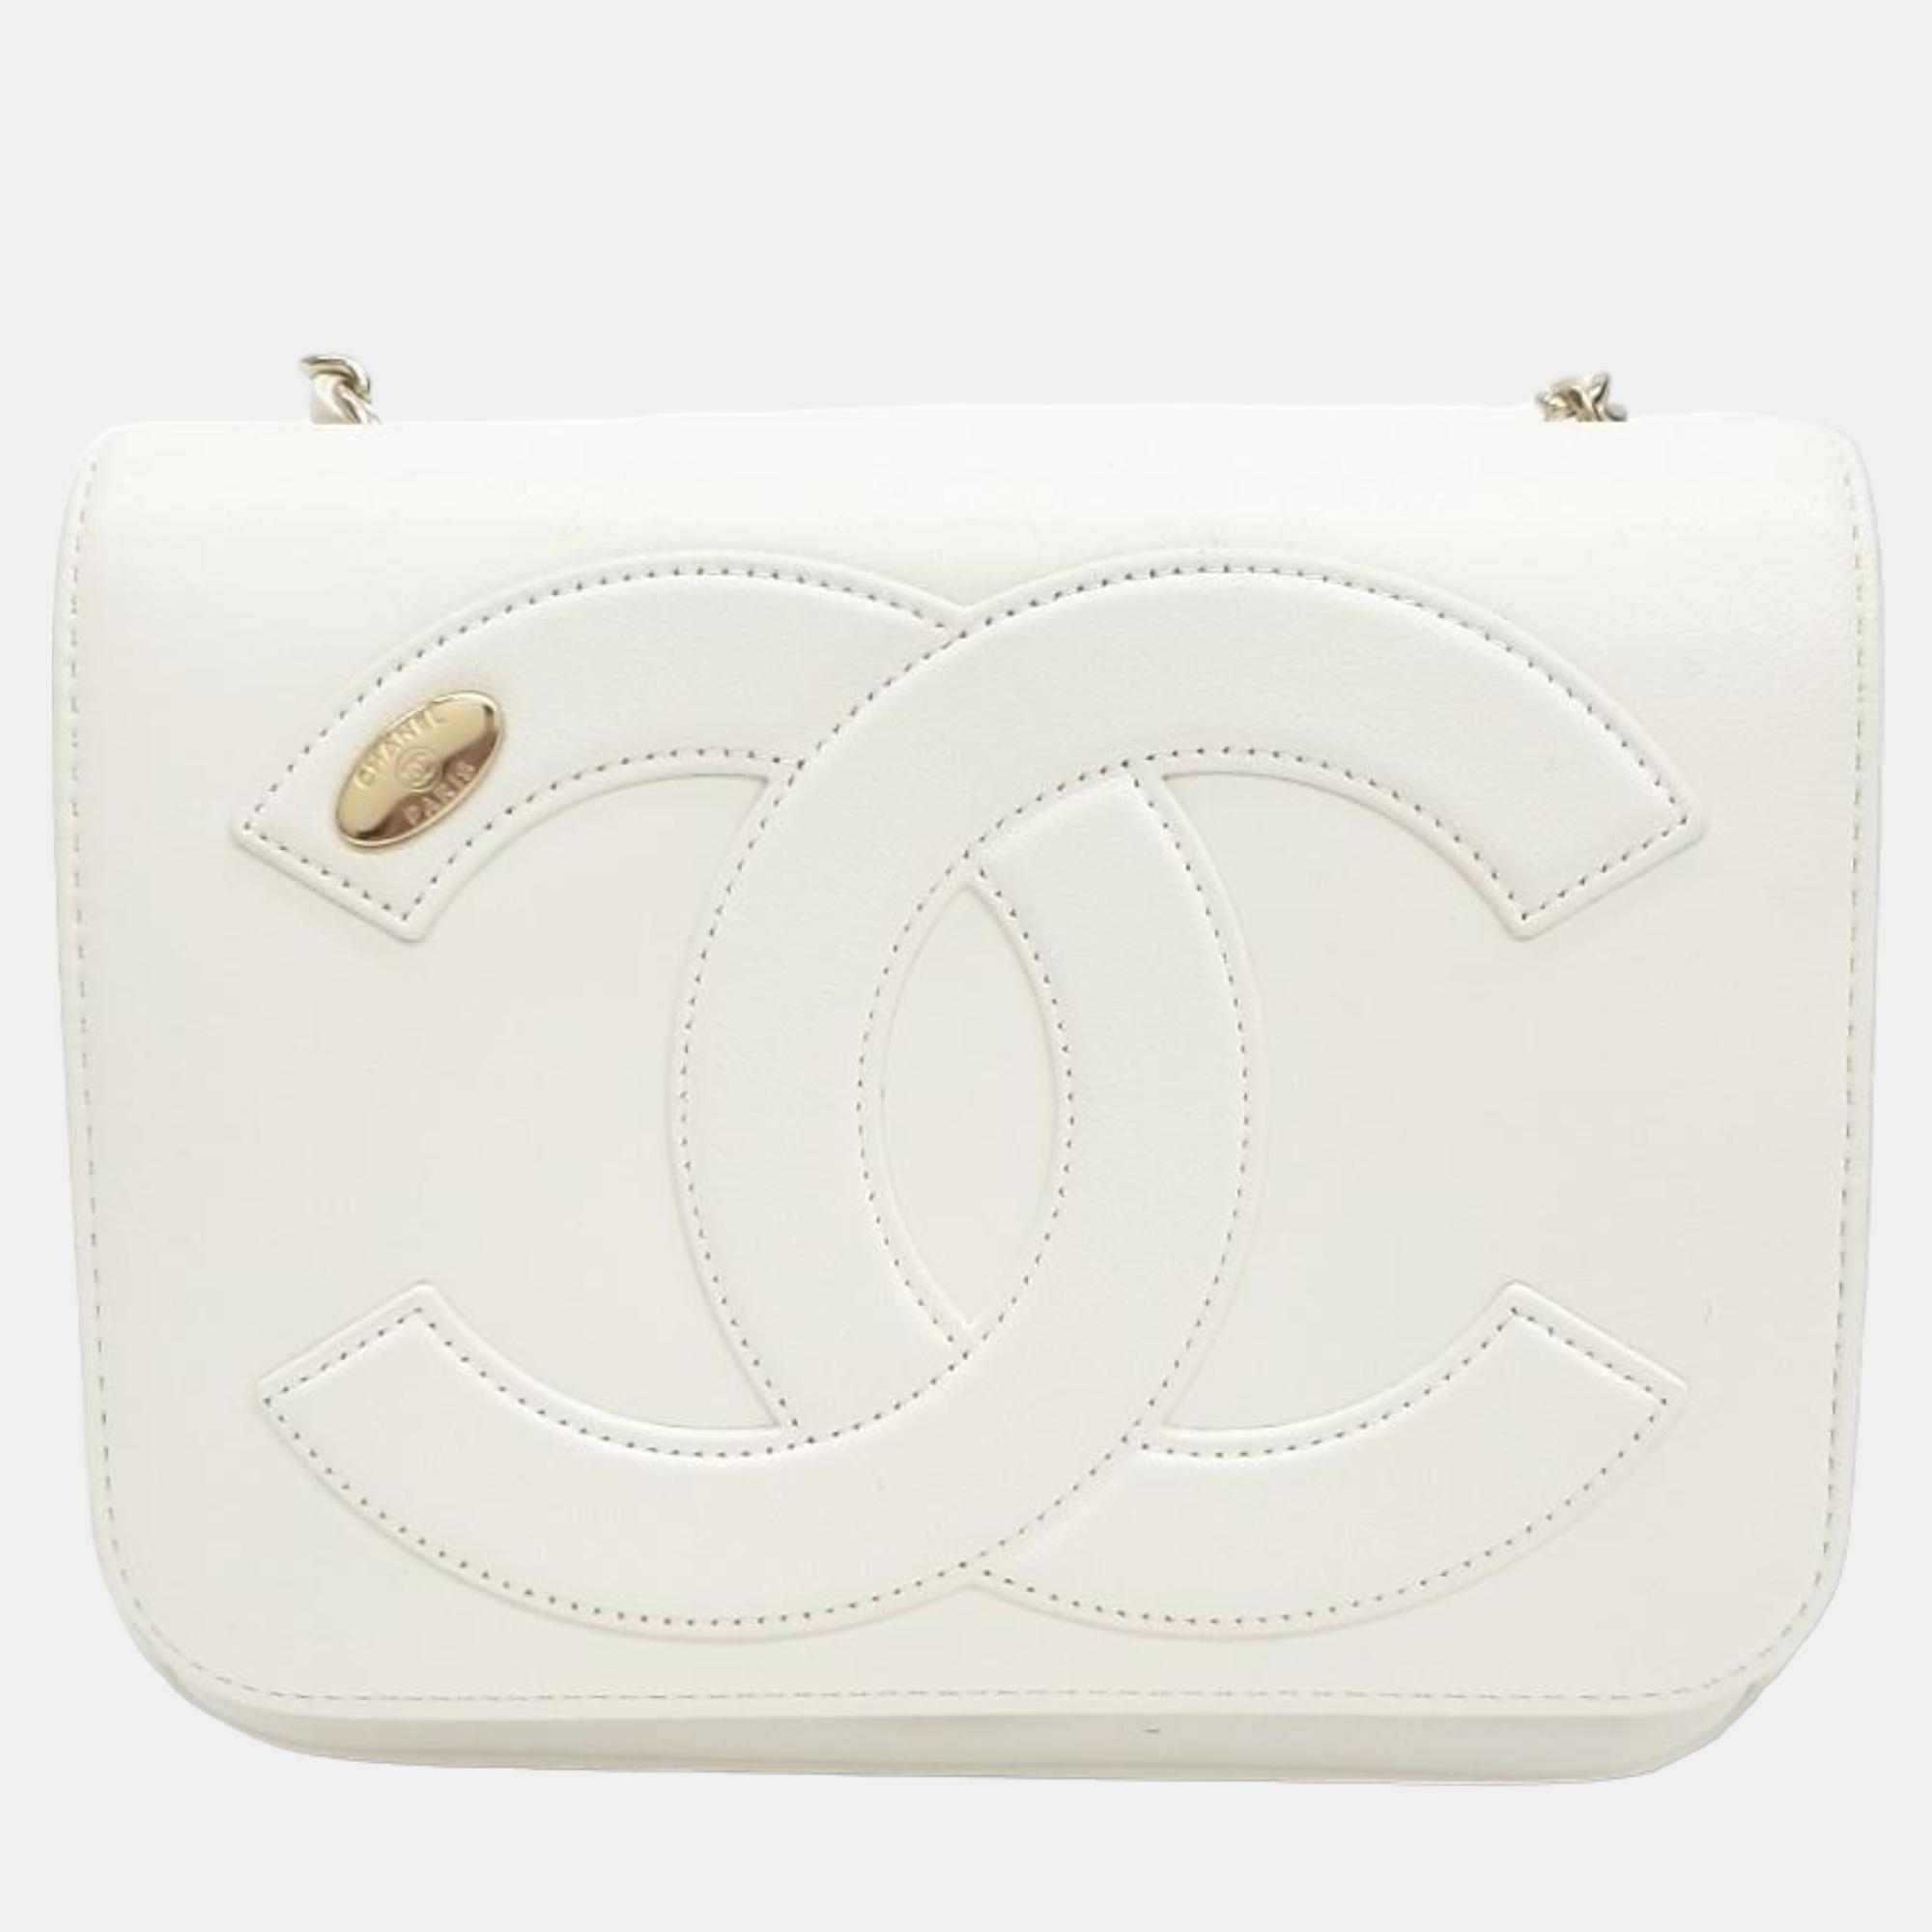 Chanel  White Lambskin Leather CC Shoulder Bag